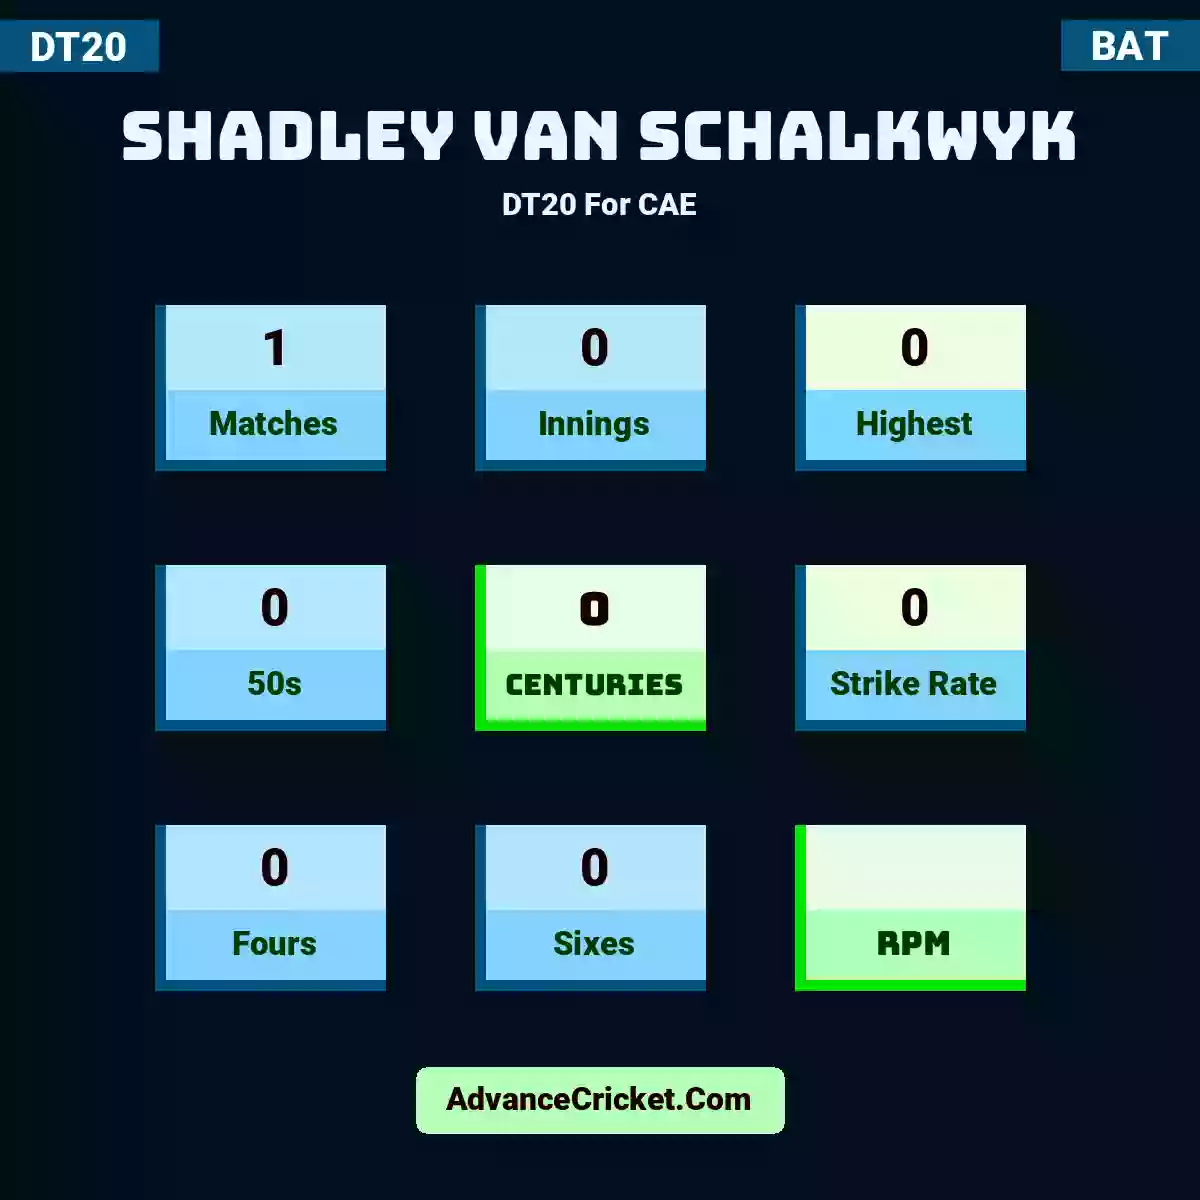 Shadley van Schalkwyk DT20  For CAE, Shadley van Schalkwyk played 1 matches, scored 0 runs as highest, 0 half-centuries, and 0 centuries, with a strike rate of 0. S.Schalkwyk hit 0 fours and 0 sixes.